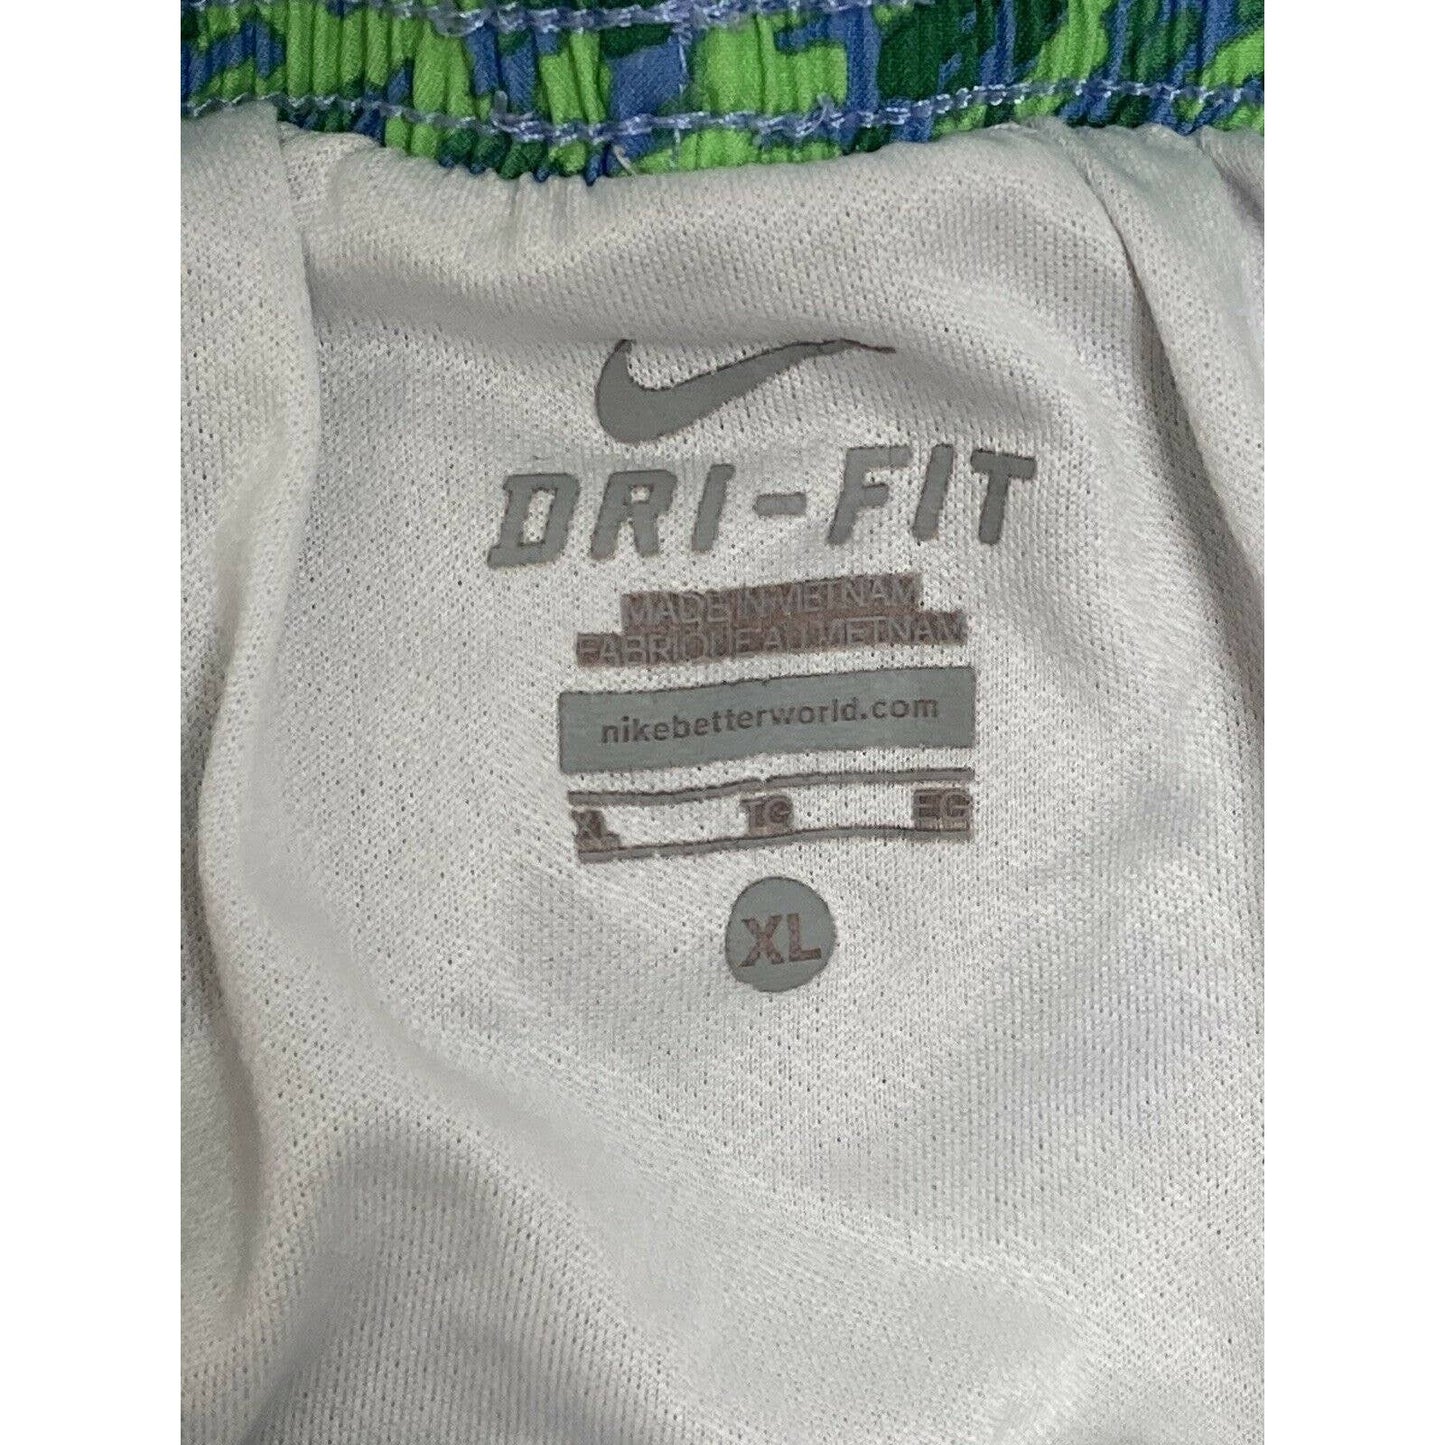 Nike Girls Dri Fit Tempo Running Shorts Size XL Green Blue